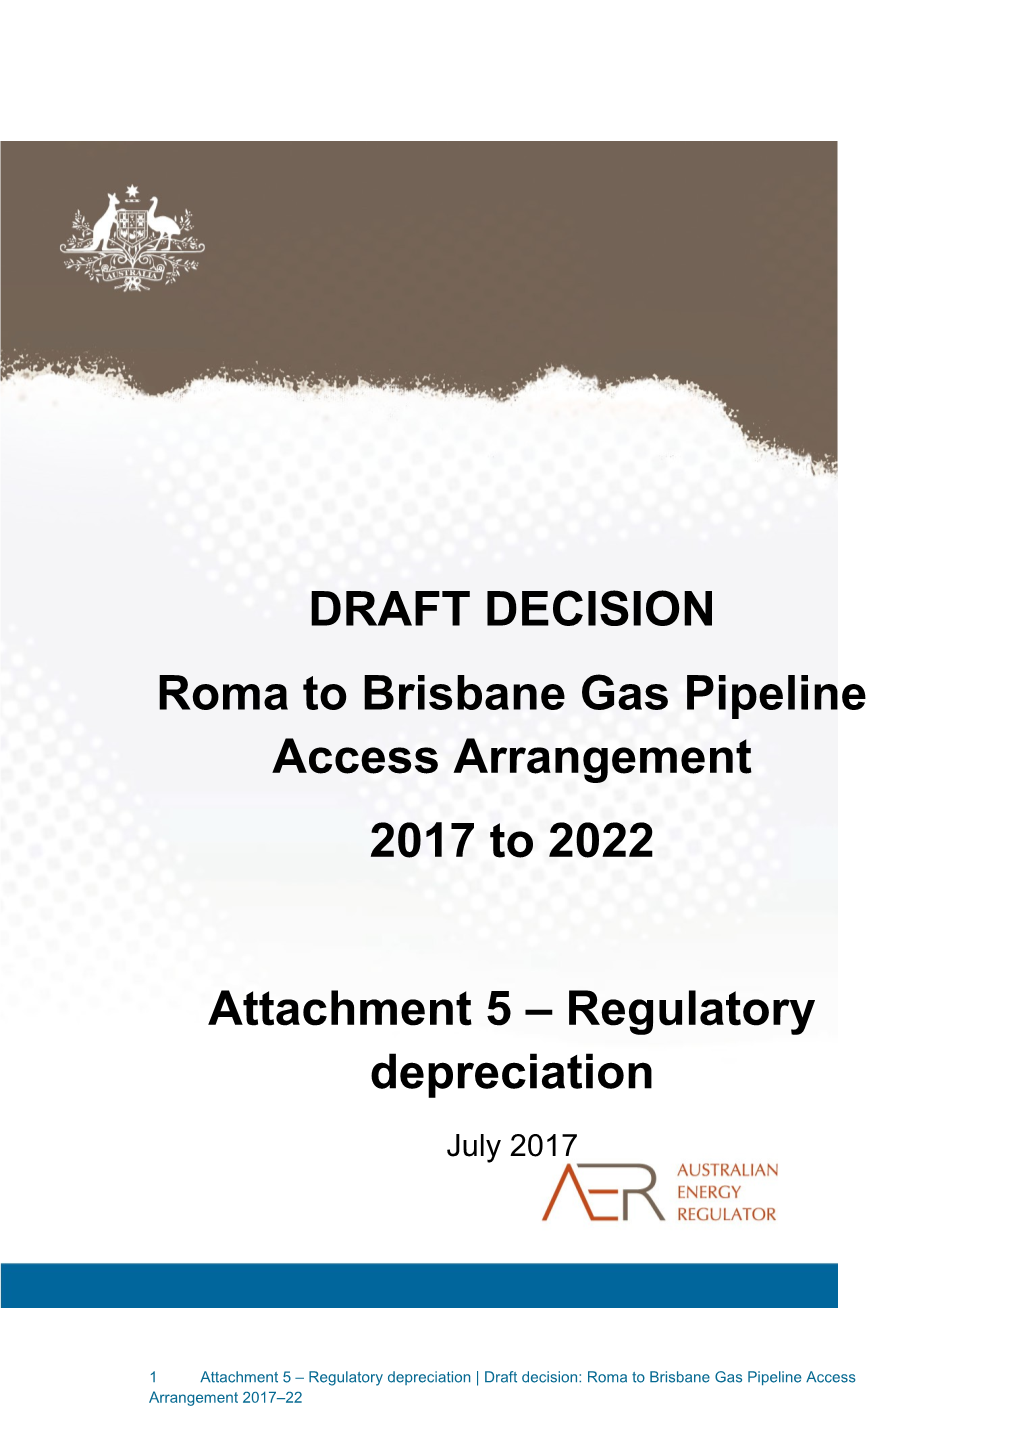 Roma to Brisbanegas Pipeline Access Arrangement